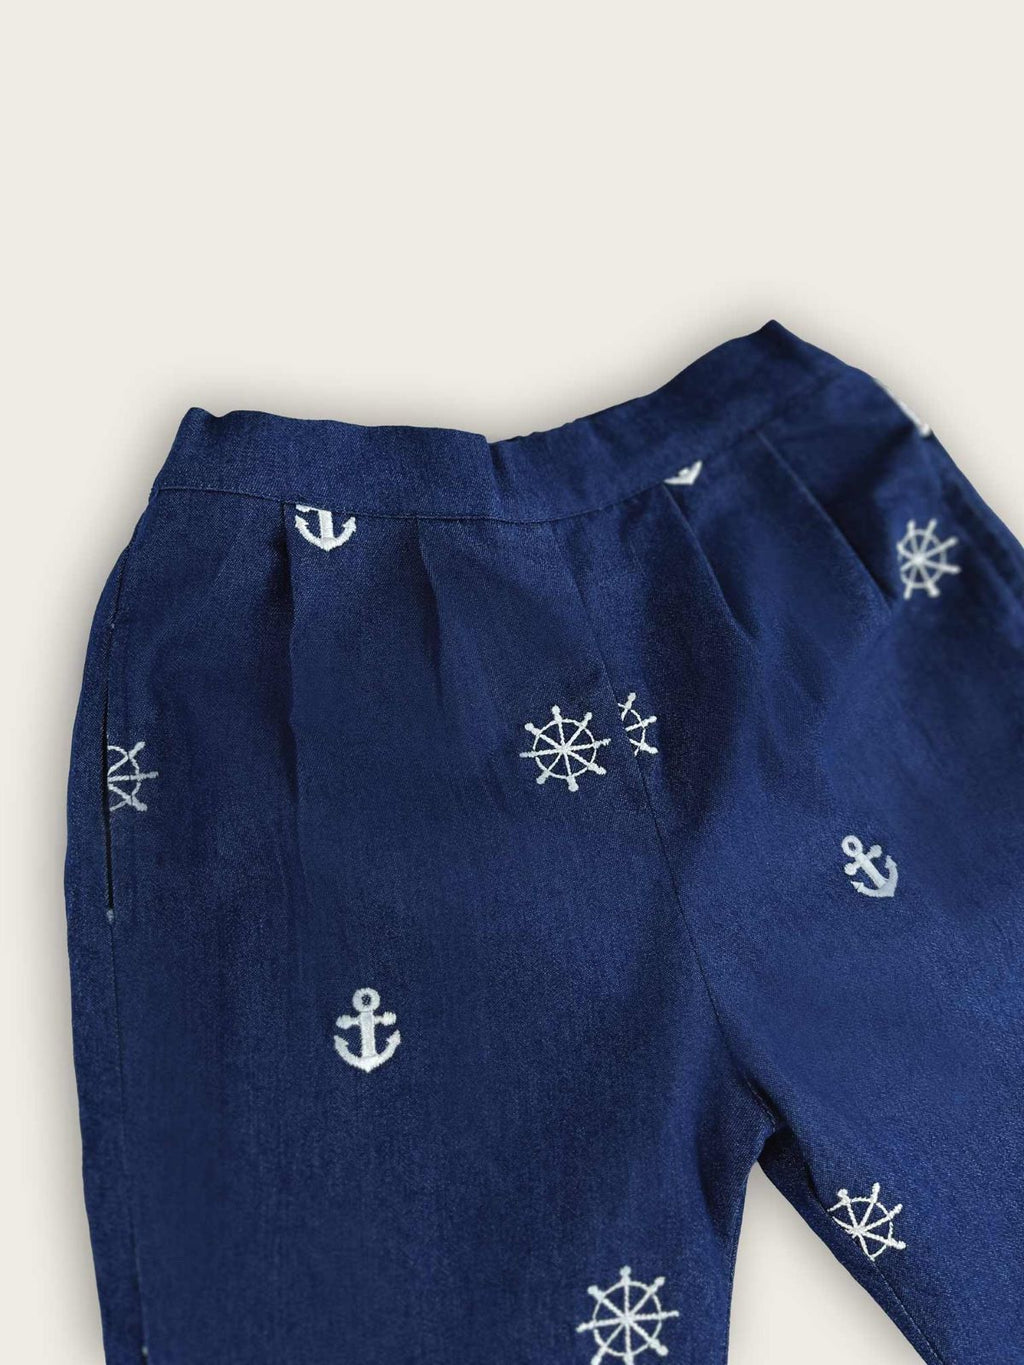 Boys nautical trouser 